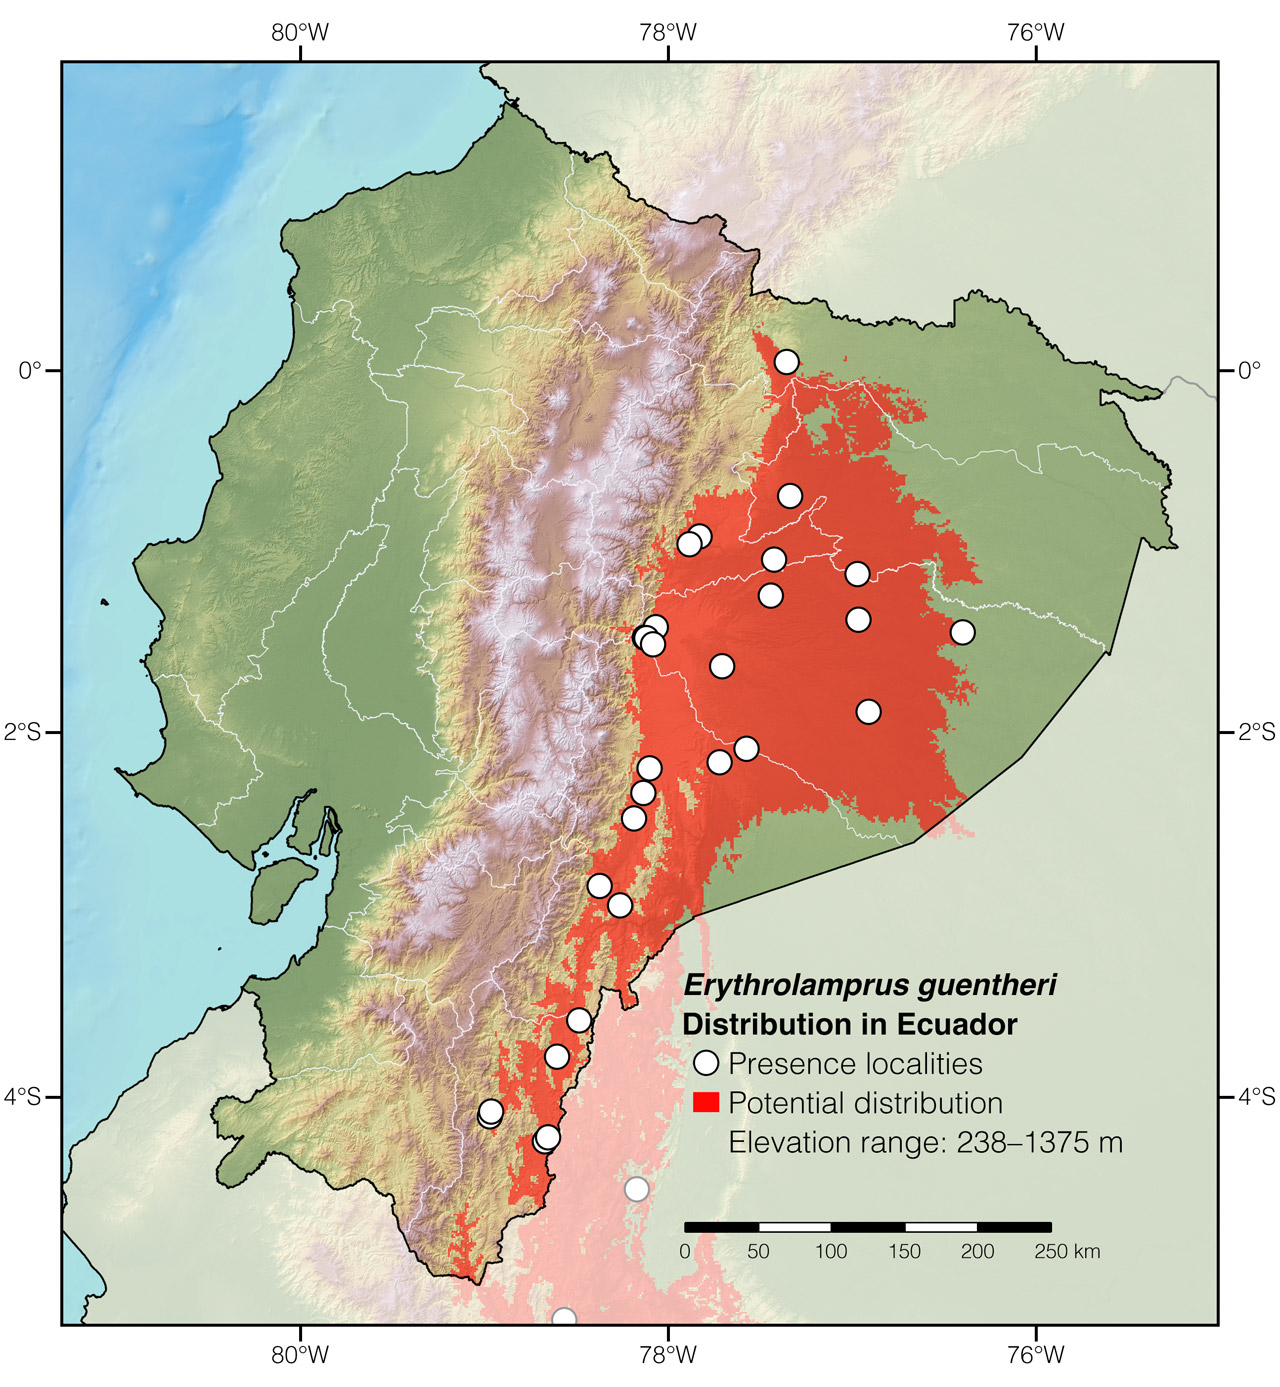 Distribution of Erythrolamprus guentheri in Ecuador